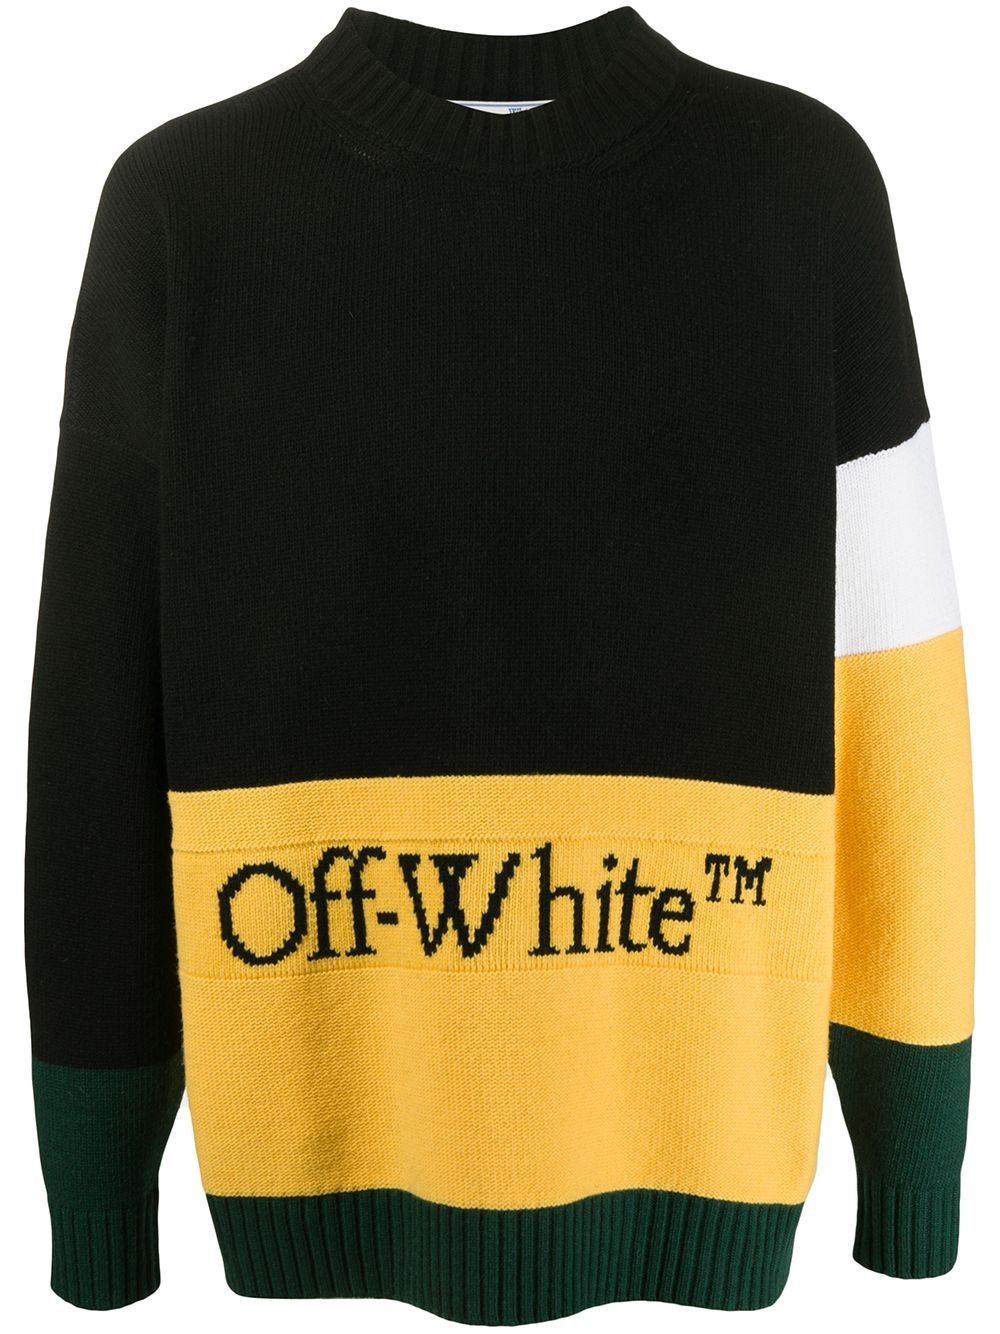 Off white sweater - philipshigh.co.uk